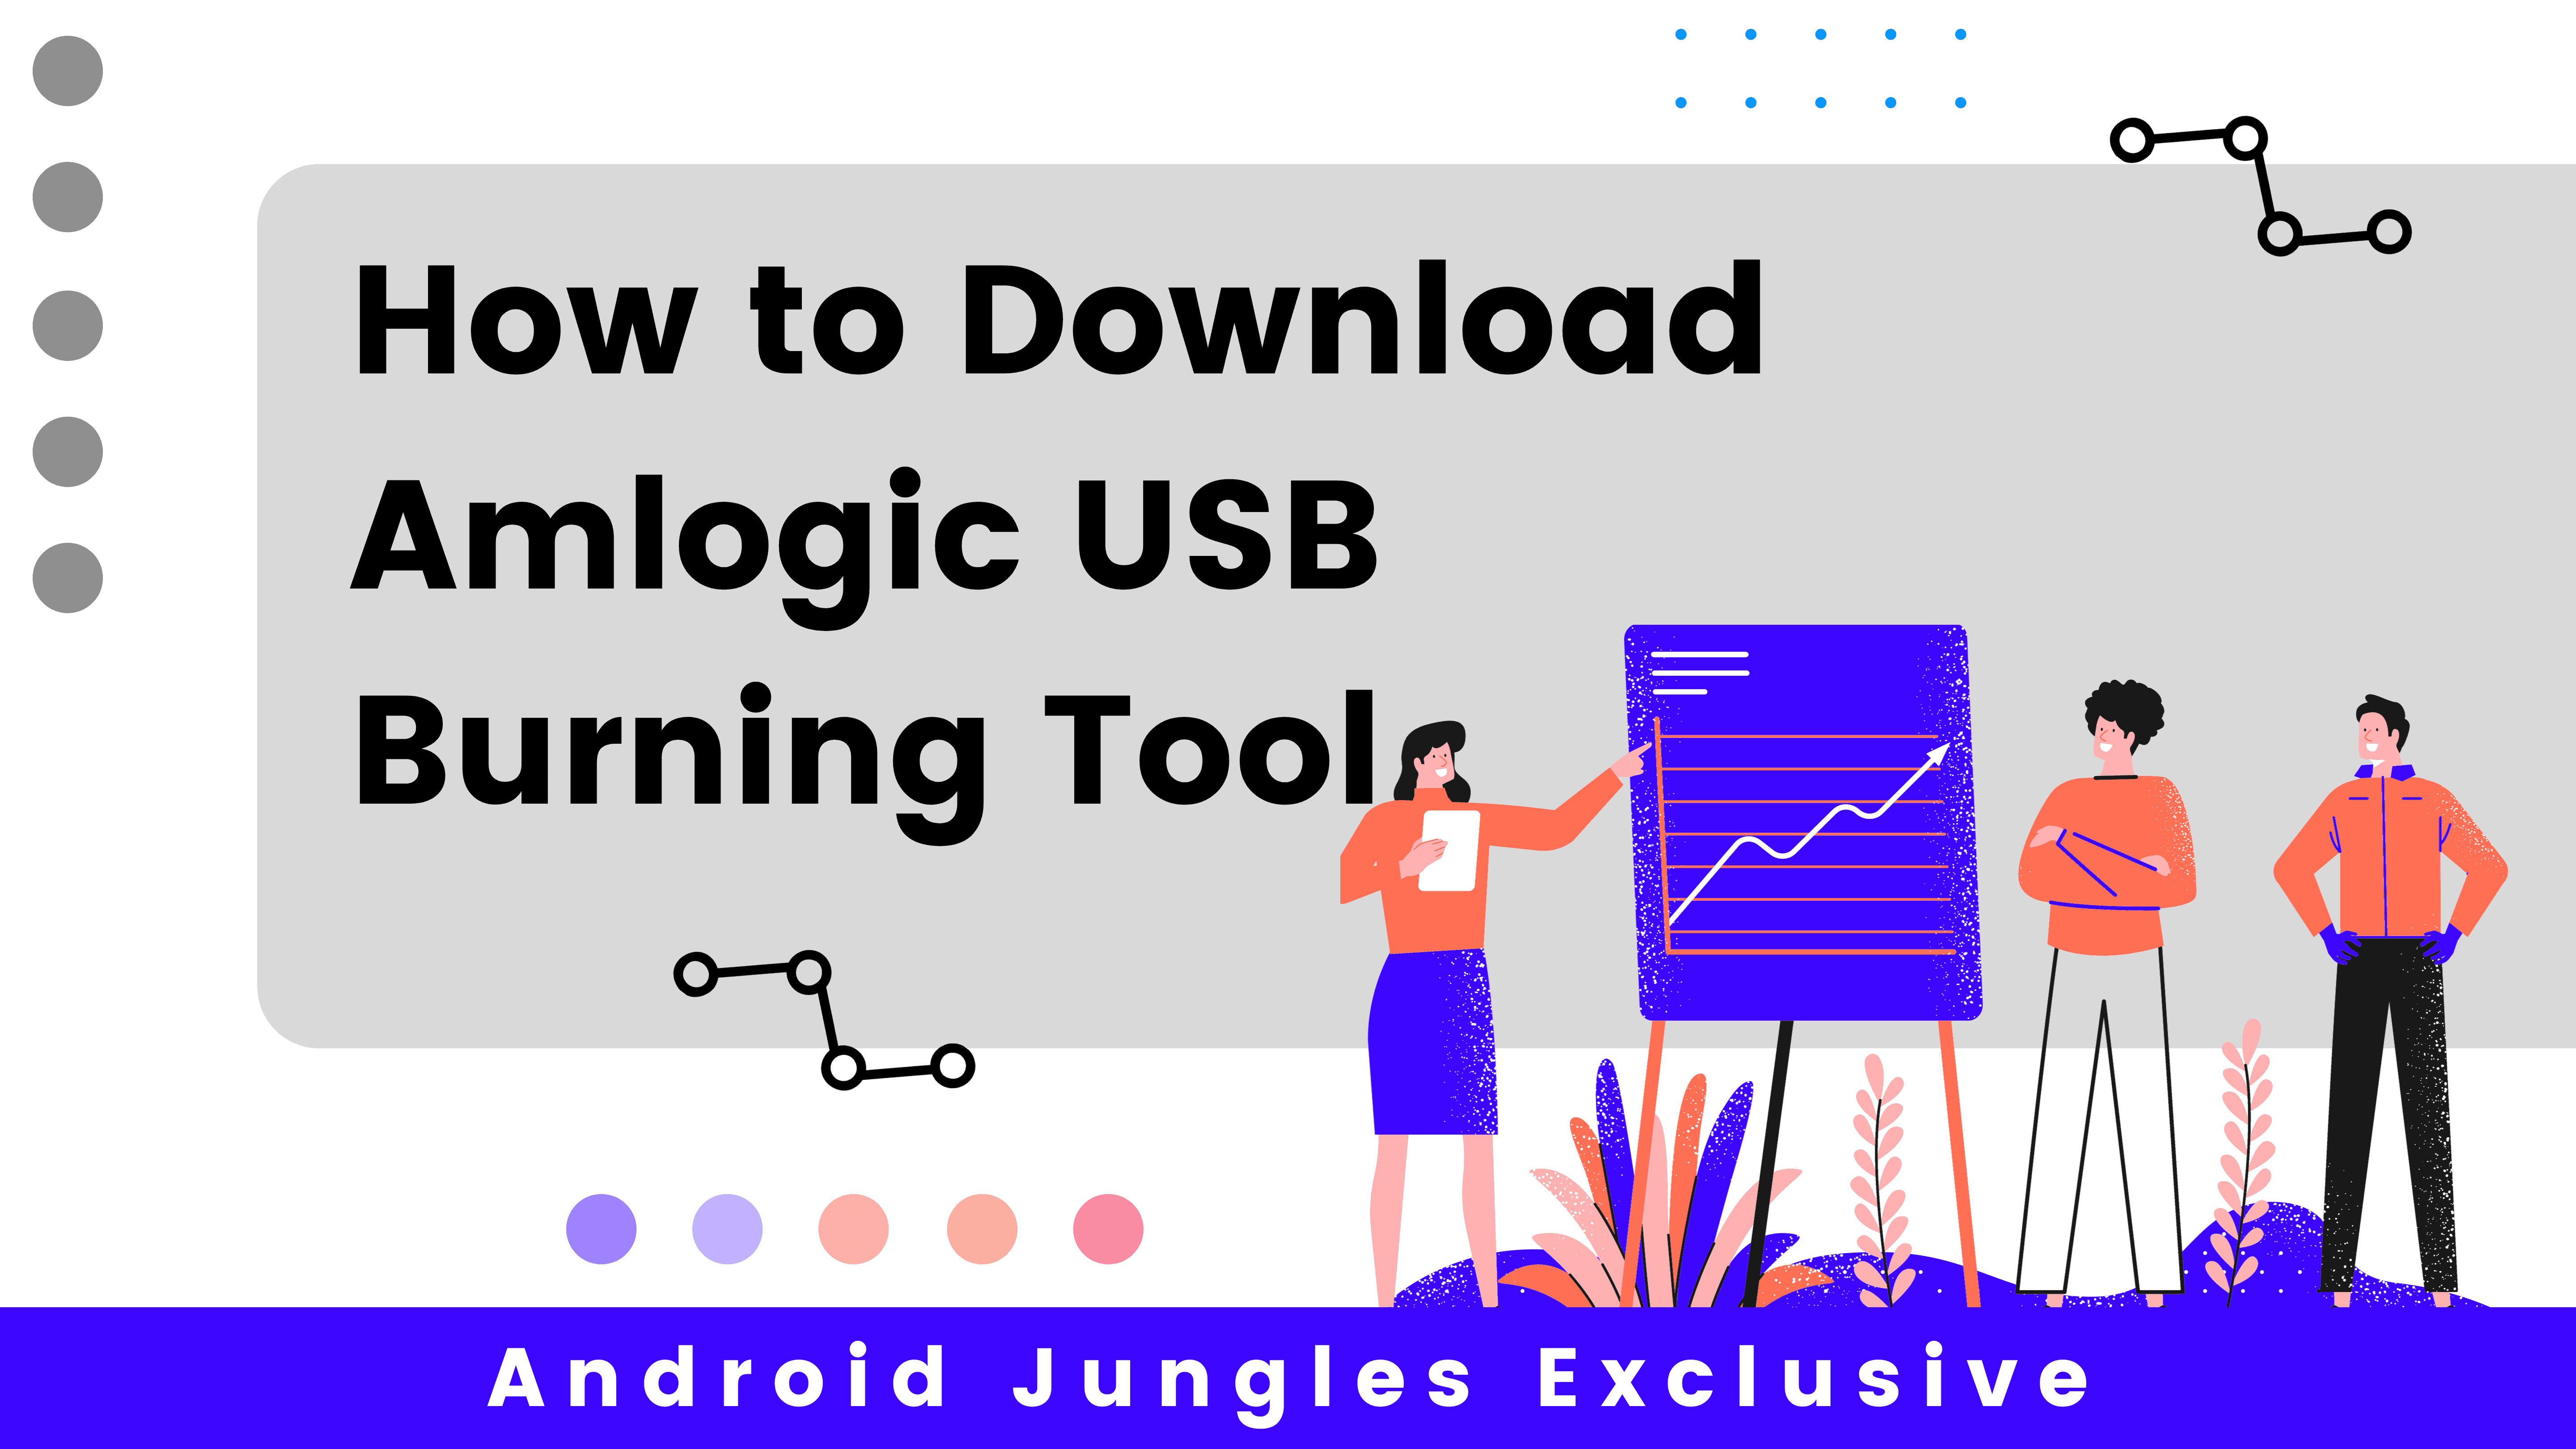 How to Download Amlogic USB Burning Tool